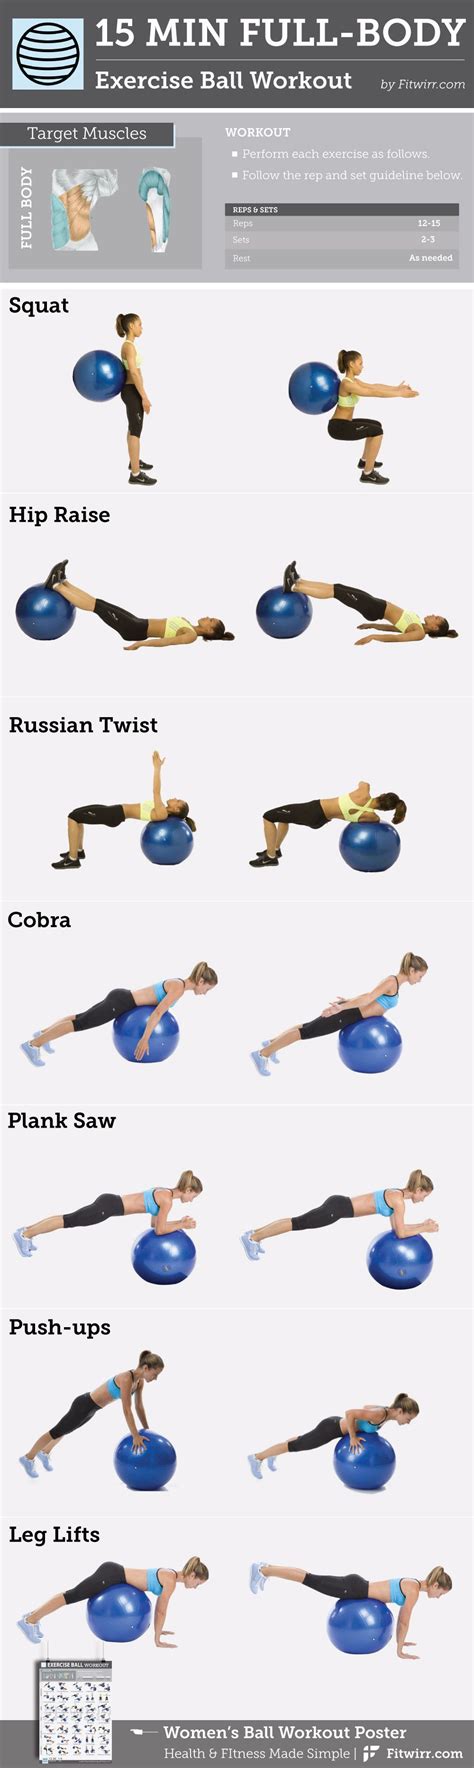 Minute Full Body Exercise Ball Workout Content Https Pinterest Com Dcindcmedia Full